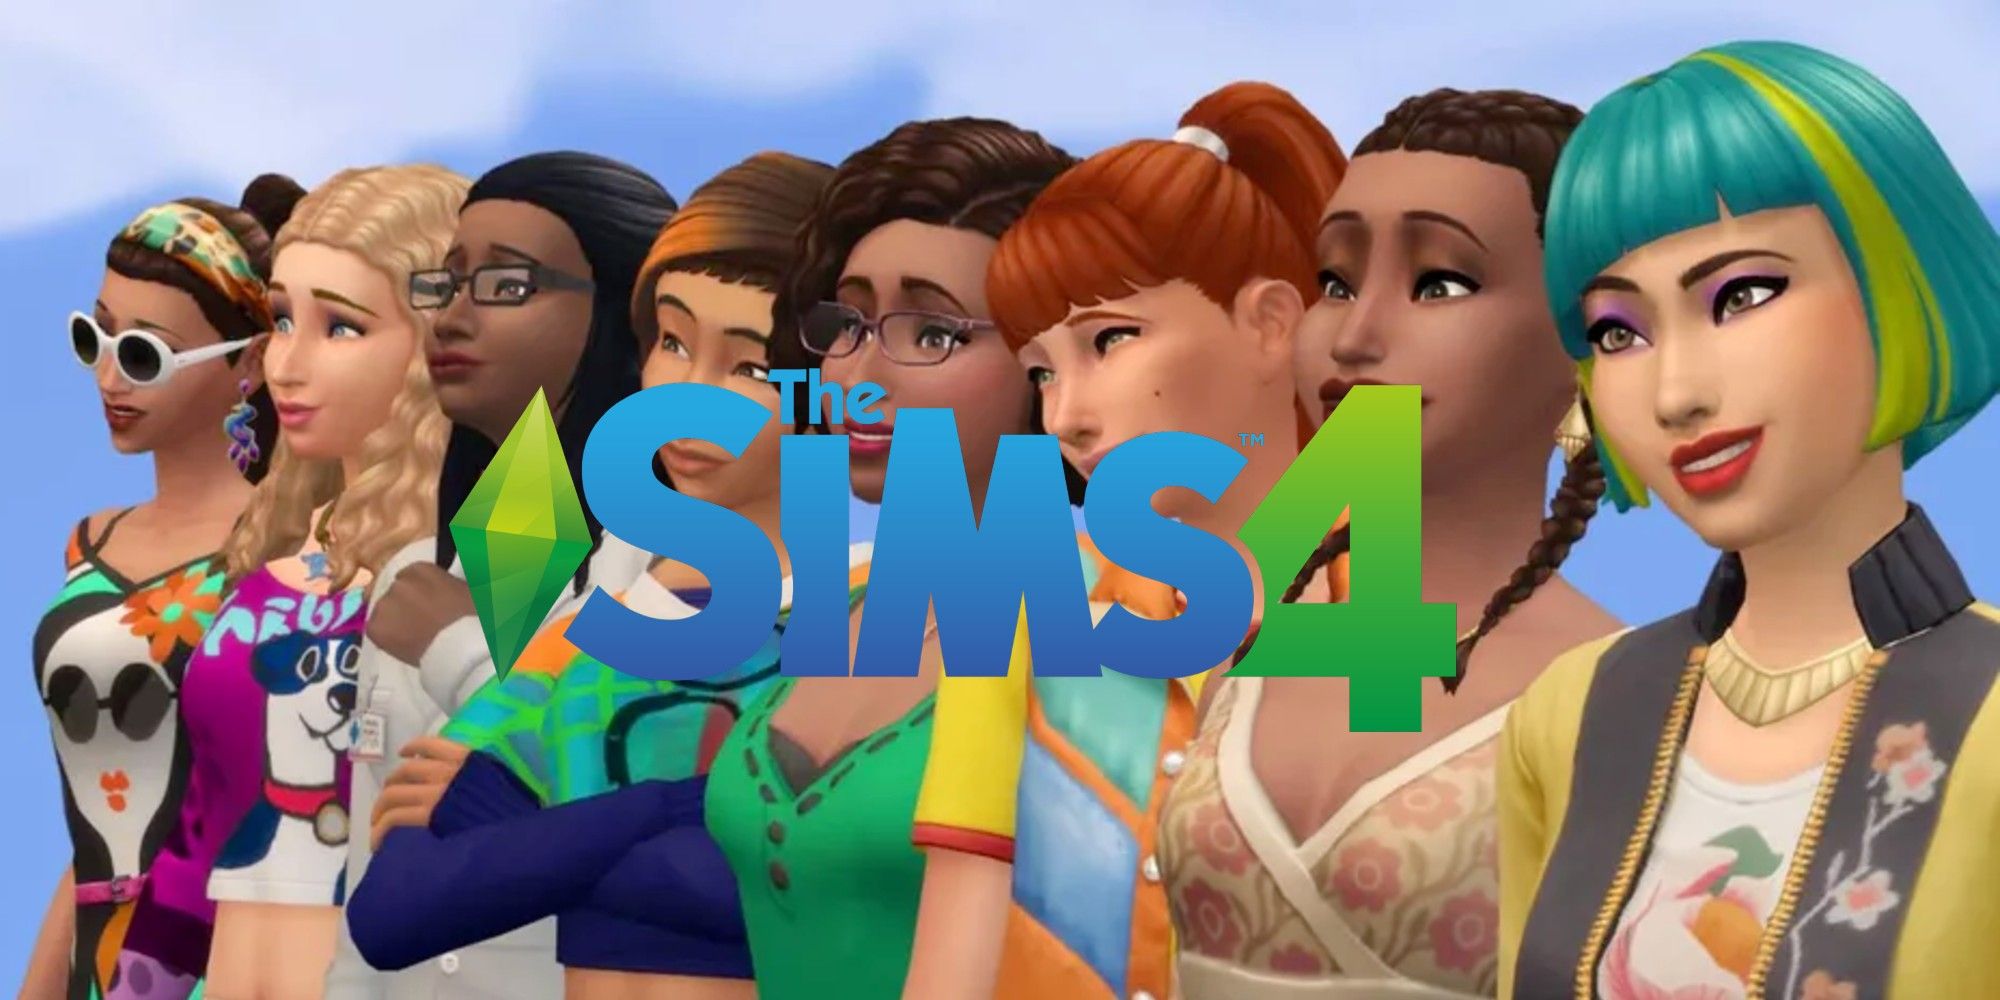 The Sims 4 has a lot to improve regarding diversity.